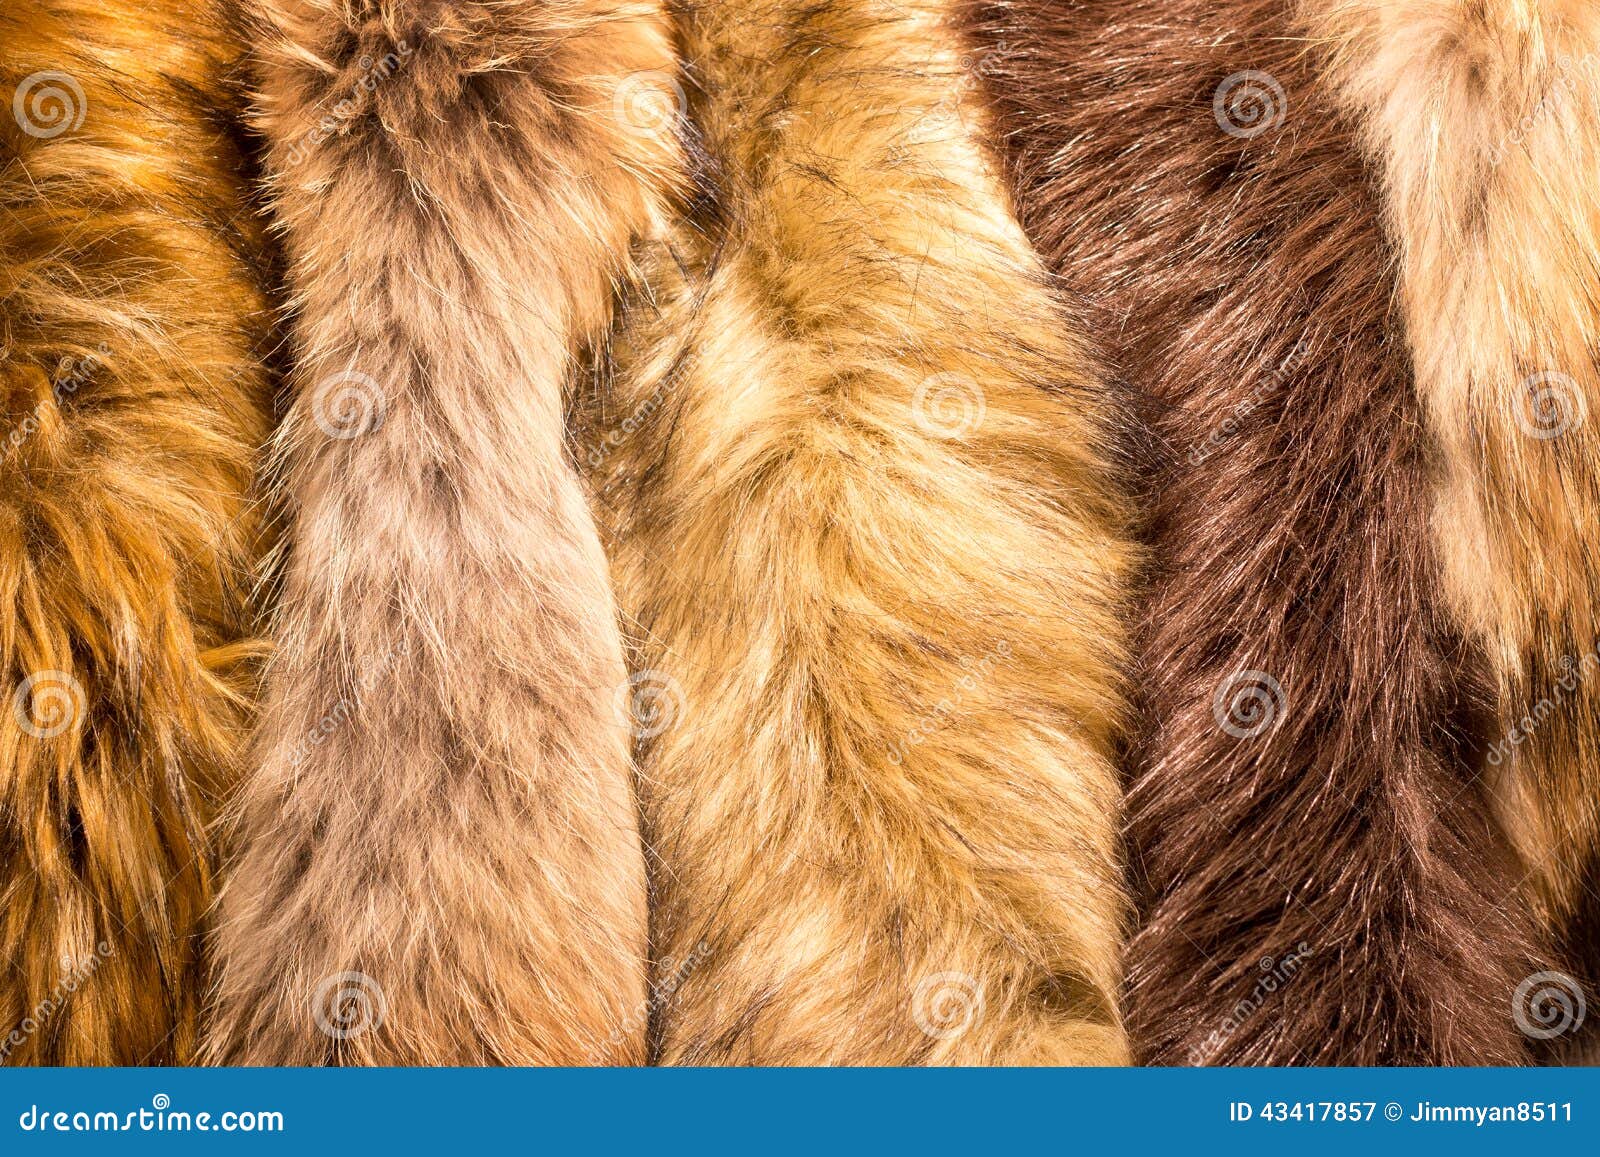 Animals fur stock image. Image of black, fluffy, closeup - 43417857